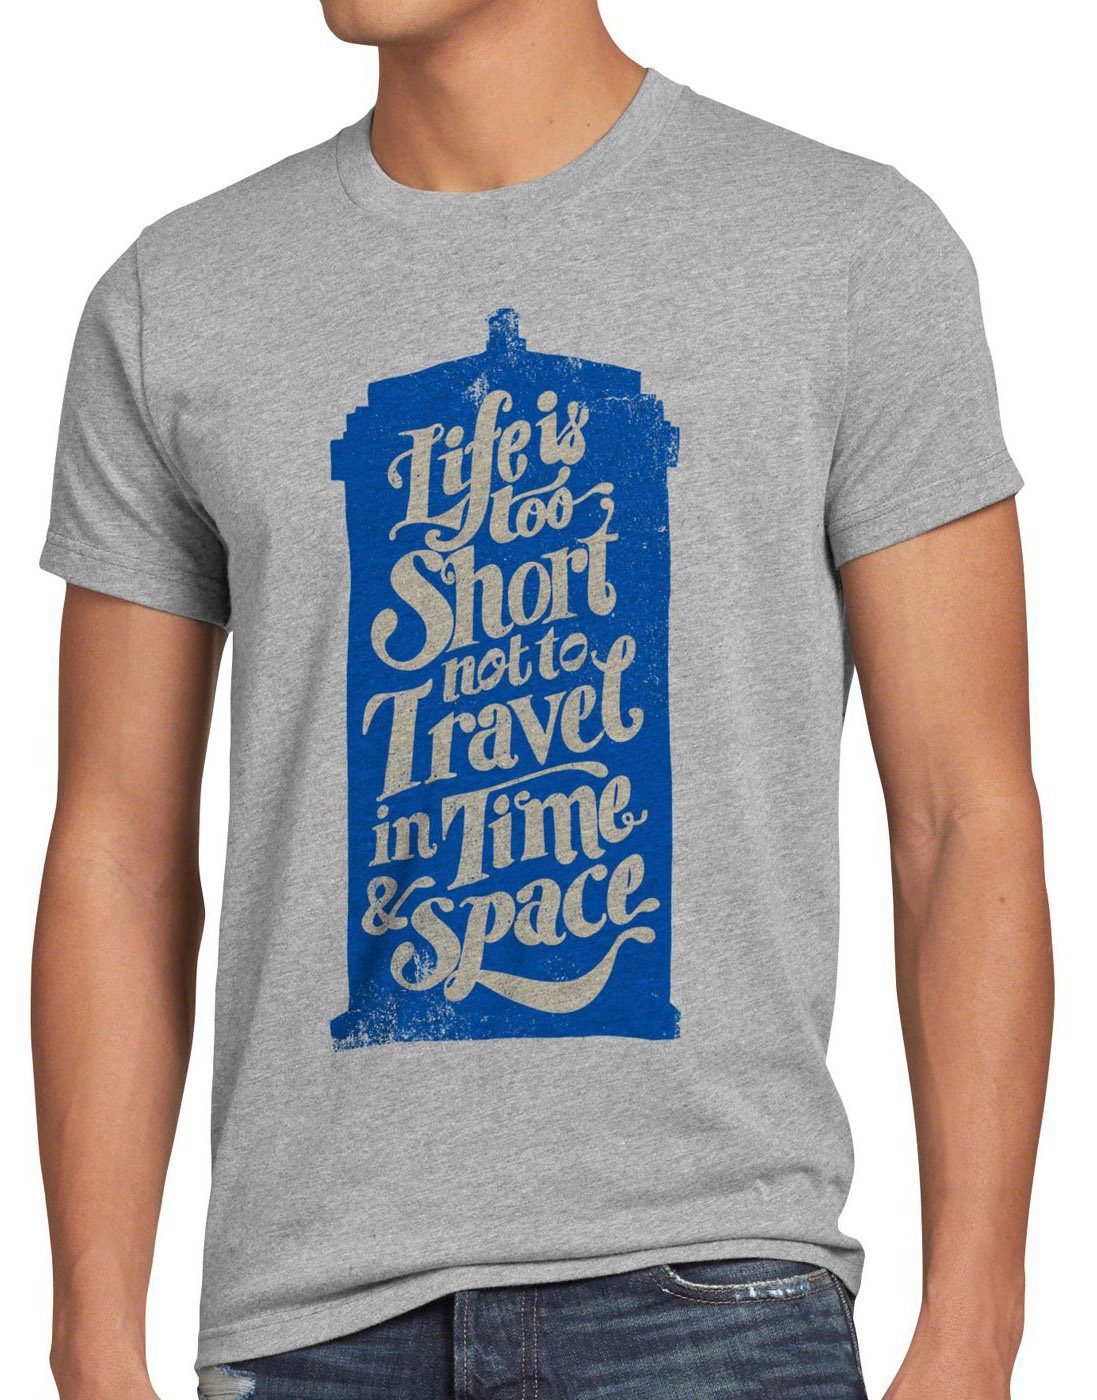 style3 Print-Shirt Time who dr. T-Shirt Doctor box dalek police Herren uk zeitreise meliert grau doktor tardis